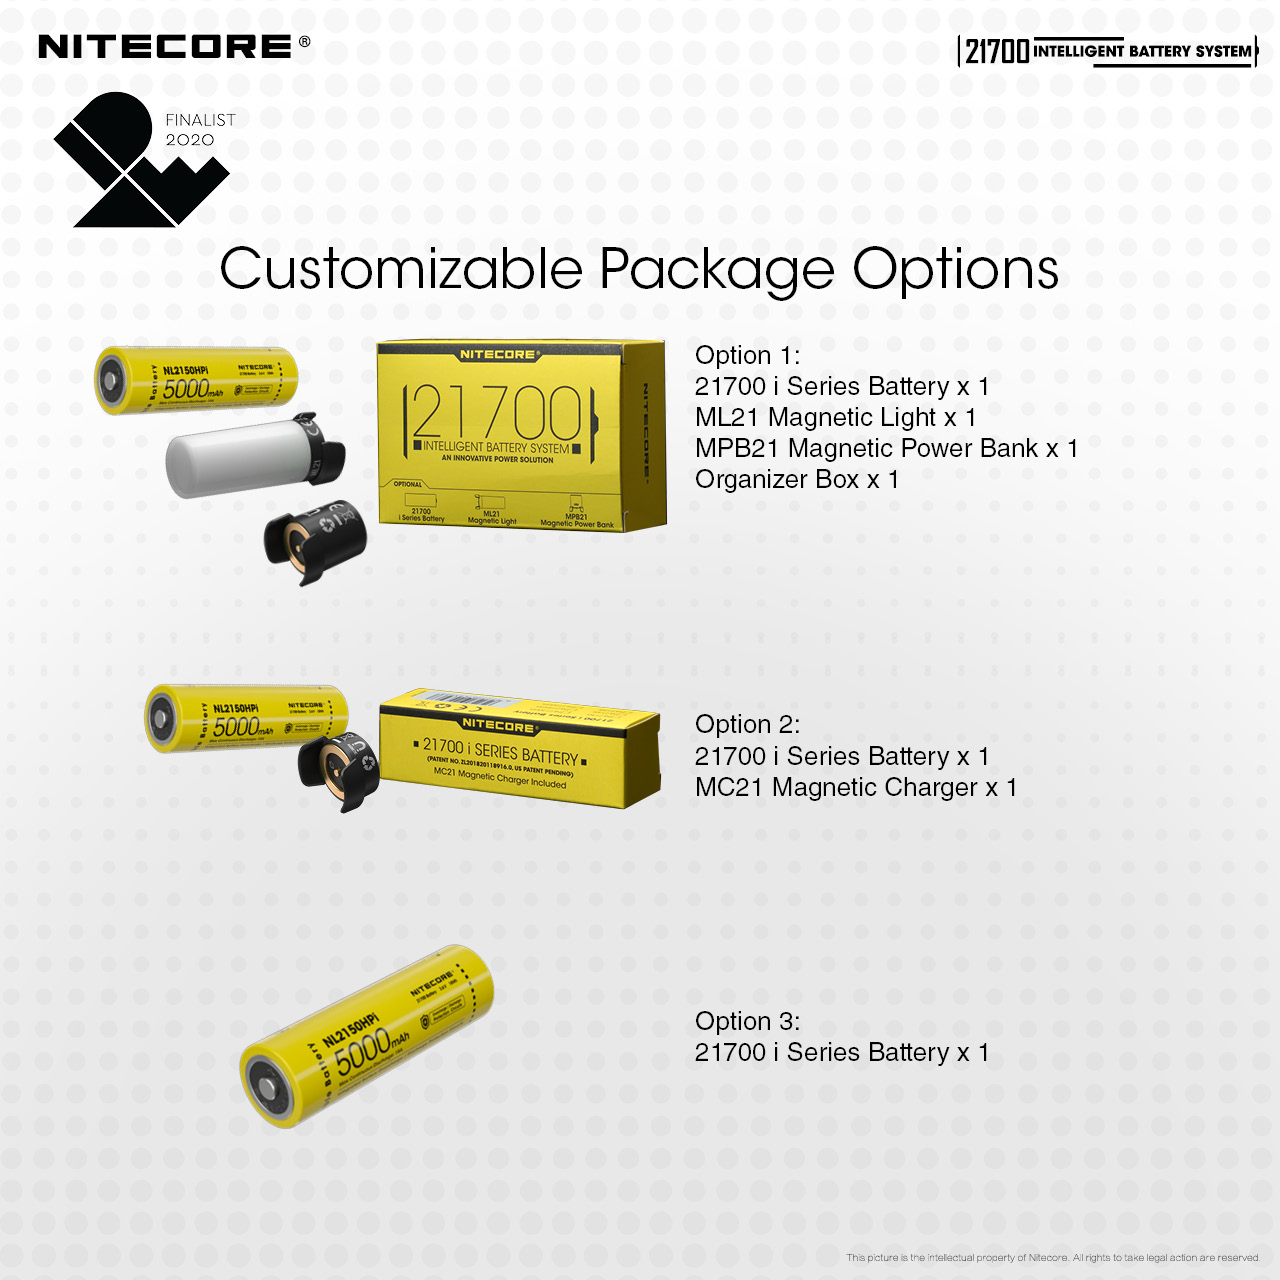 NiteCore 21700 Intelligent Battery System